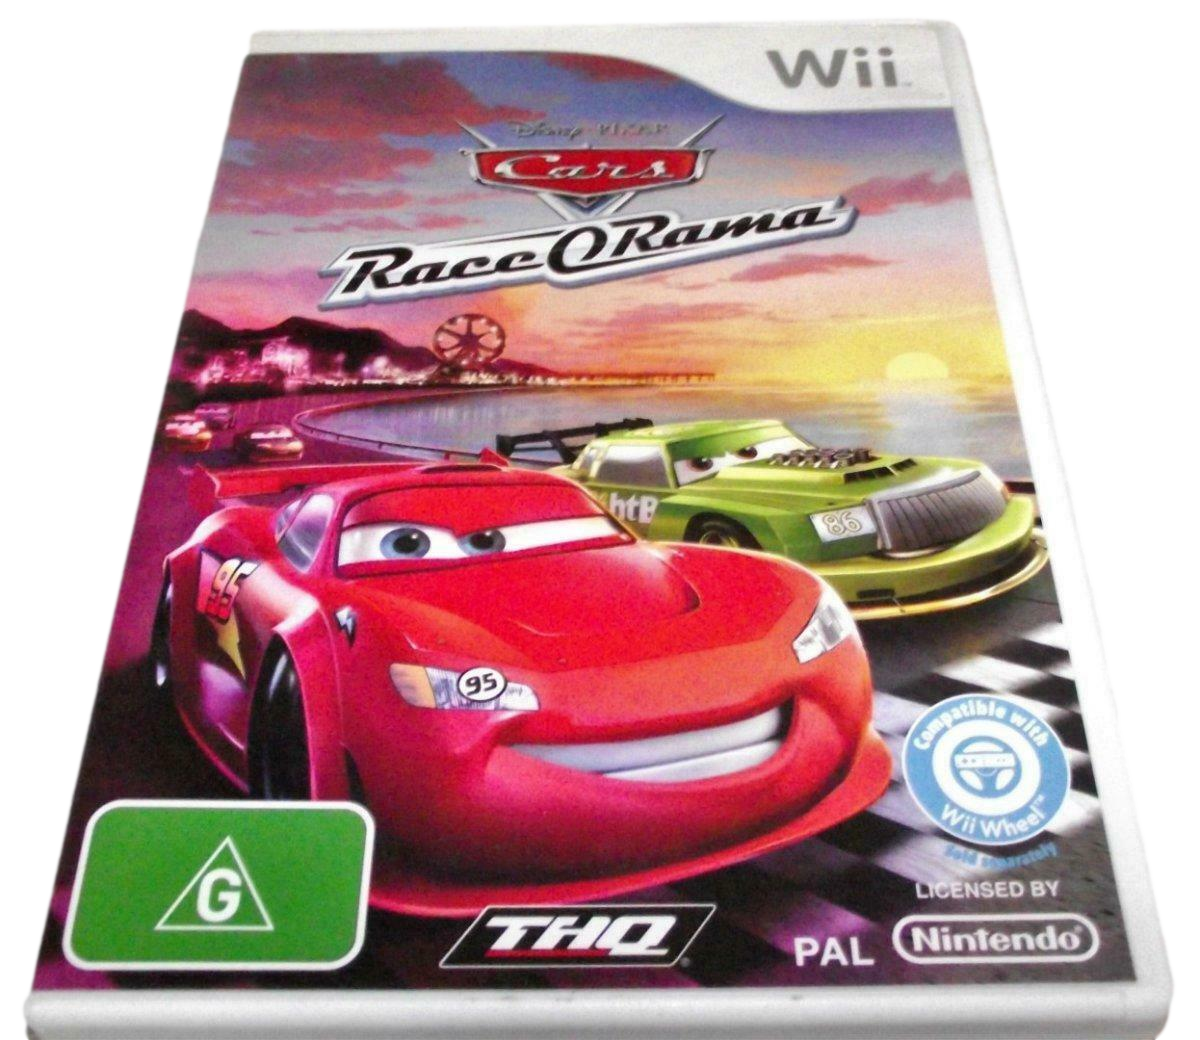 Cars Race-O-Rama Nintendo Wii